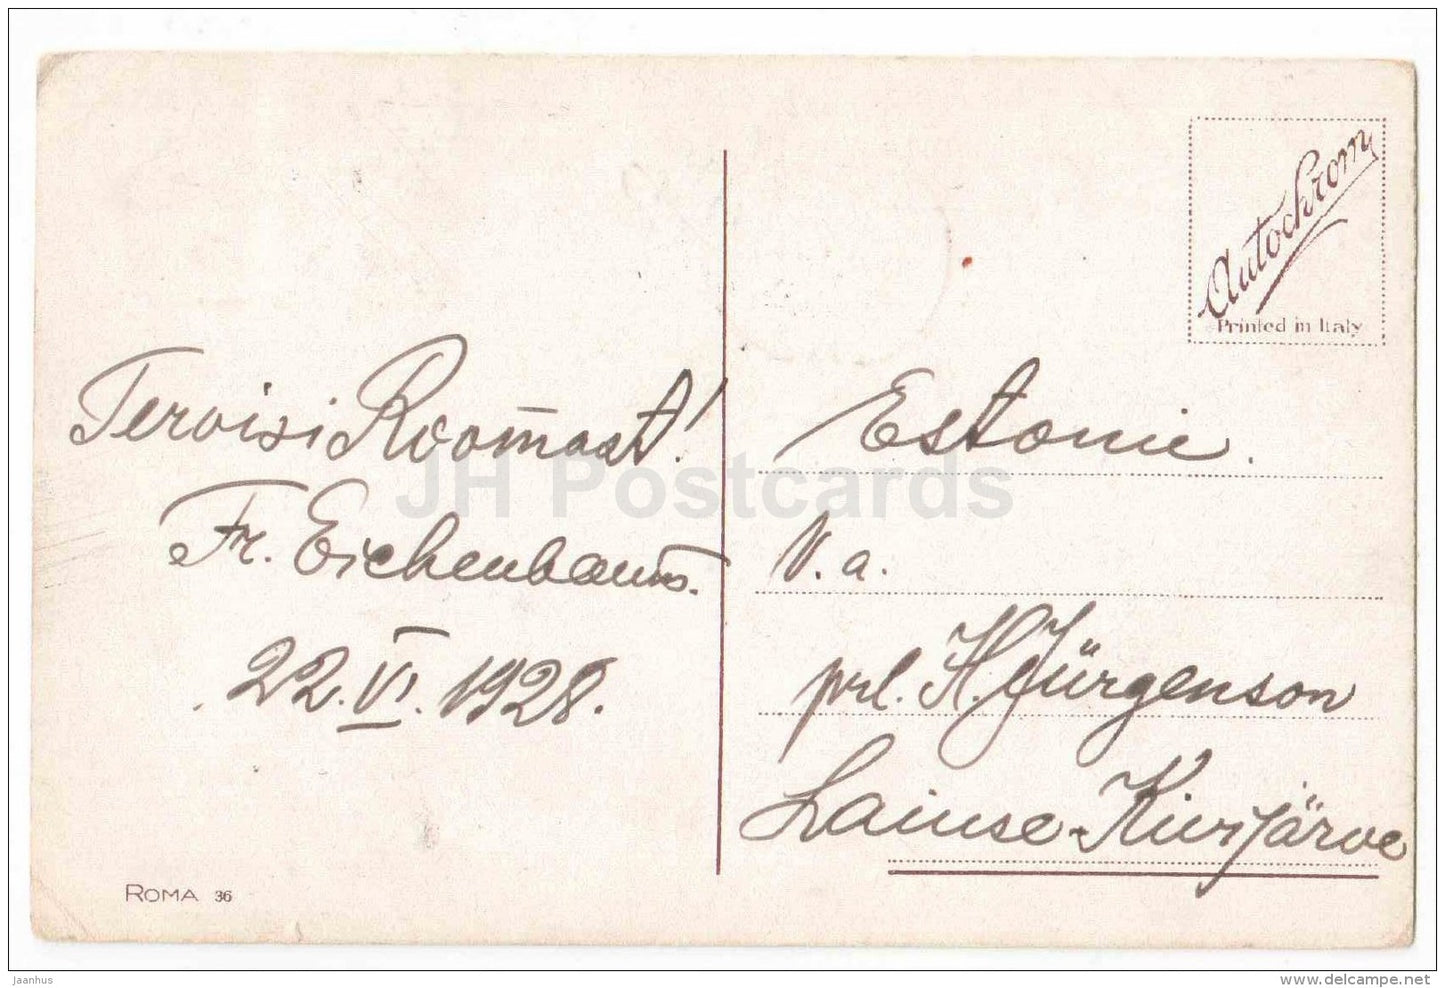 Il Panteon - Pantheon - Roma - Rome - 36 - Italia - Italy - sent from Italy Rome to Estonia 1928 - JH Postcards